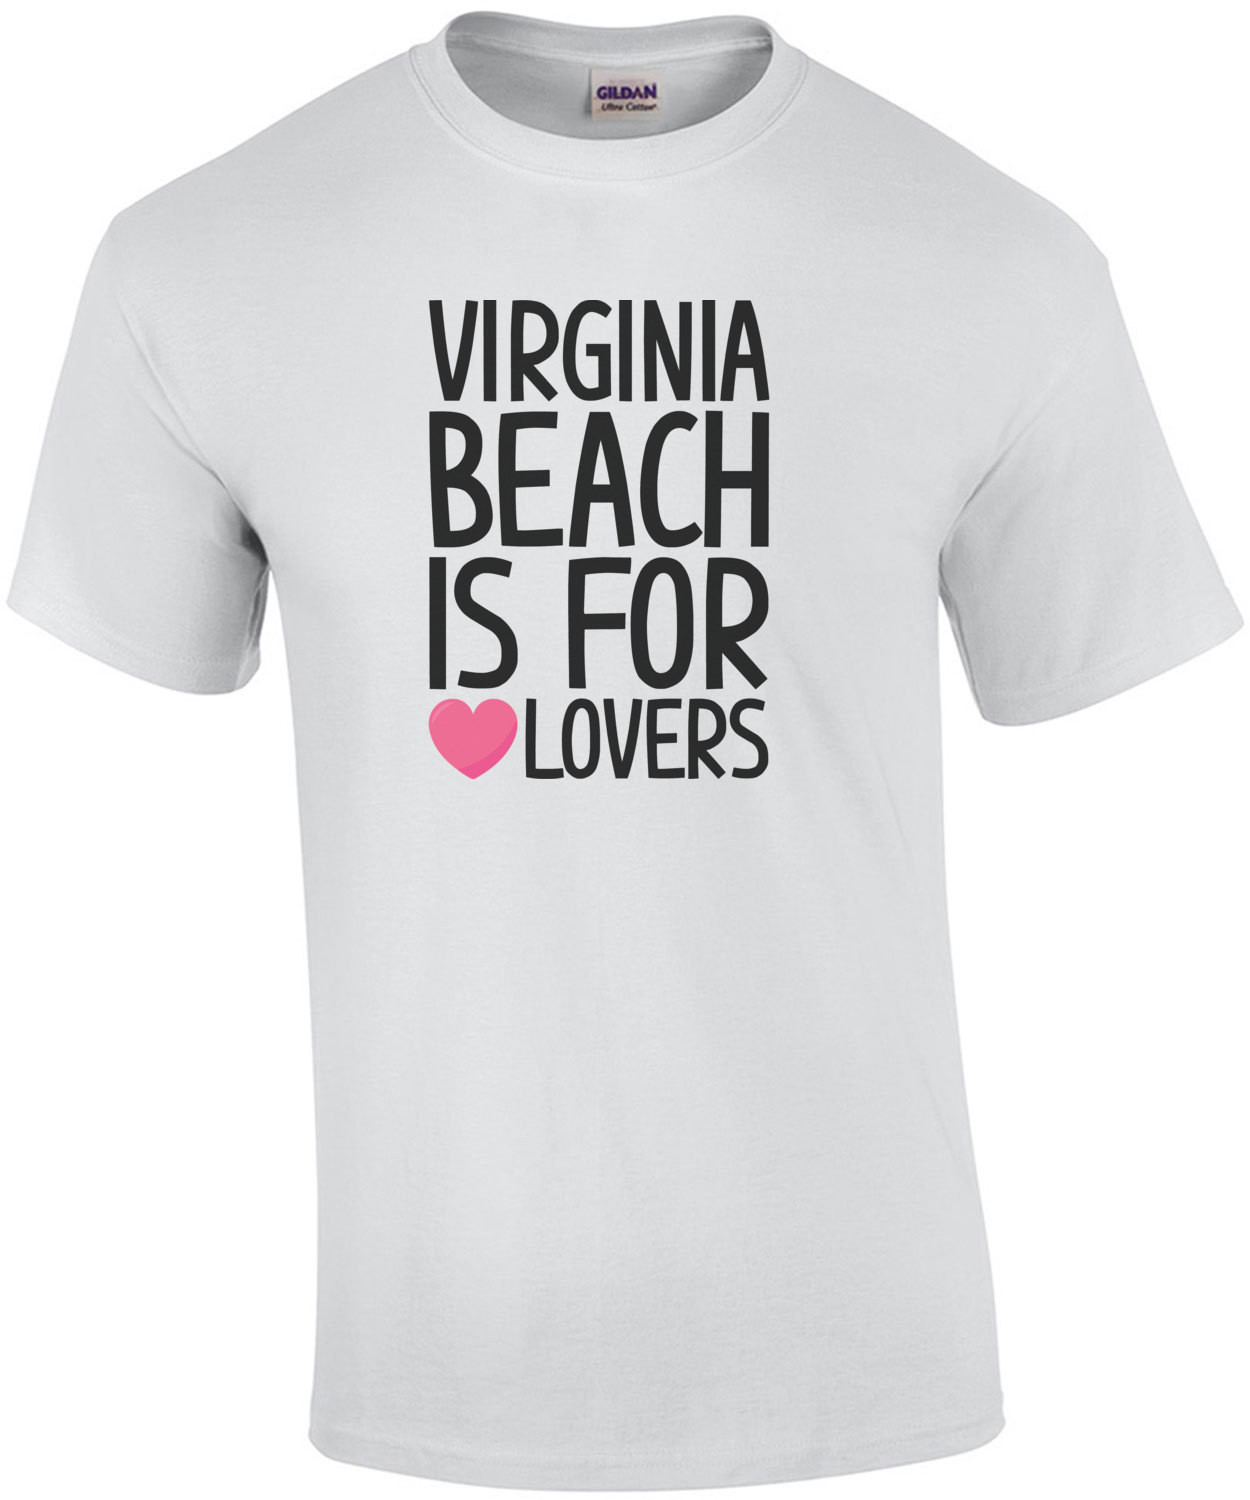 Virginia Beach is for lovers - Virginia T-Shirt